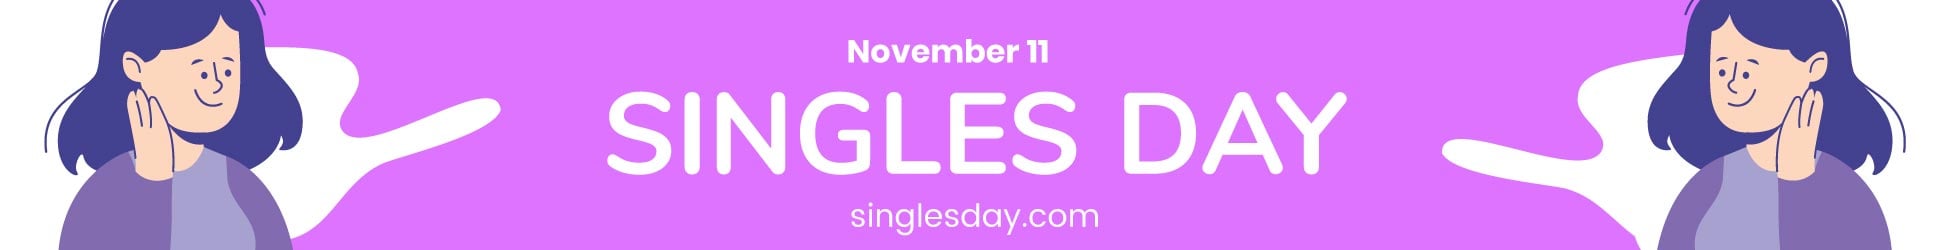 Free Singles Day Website Banner in Illustrator, PSD, EPS, SVG, JPG, PNG